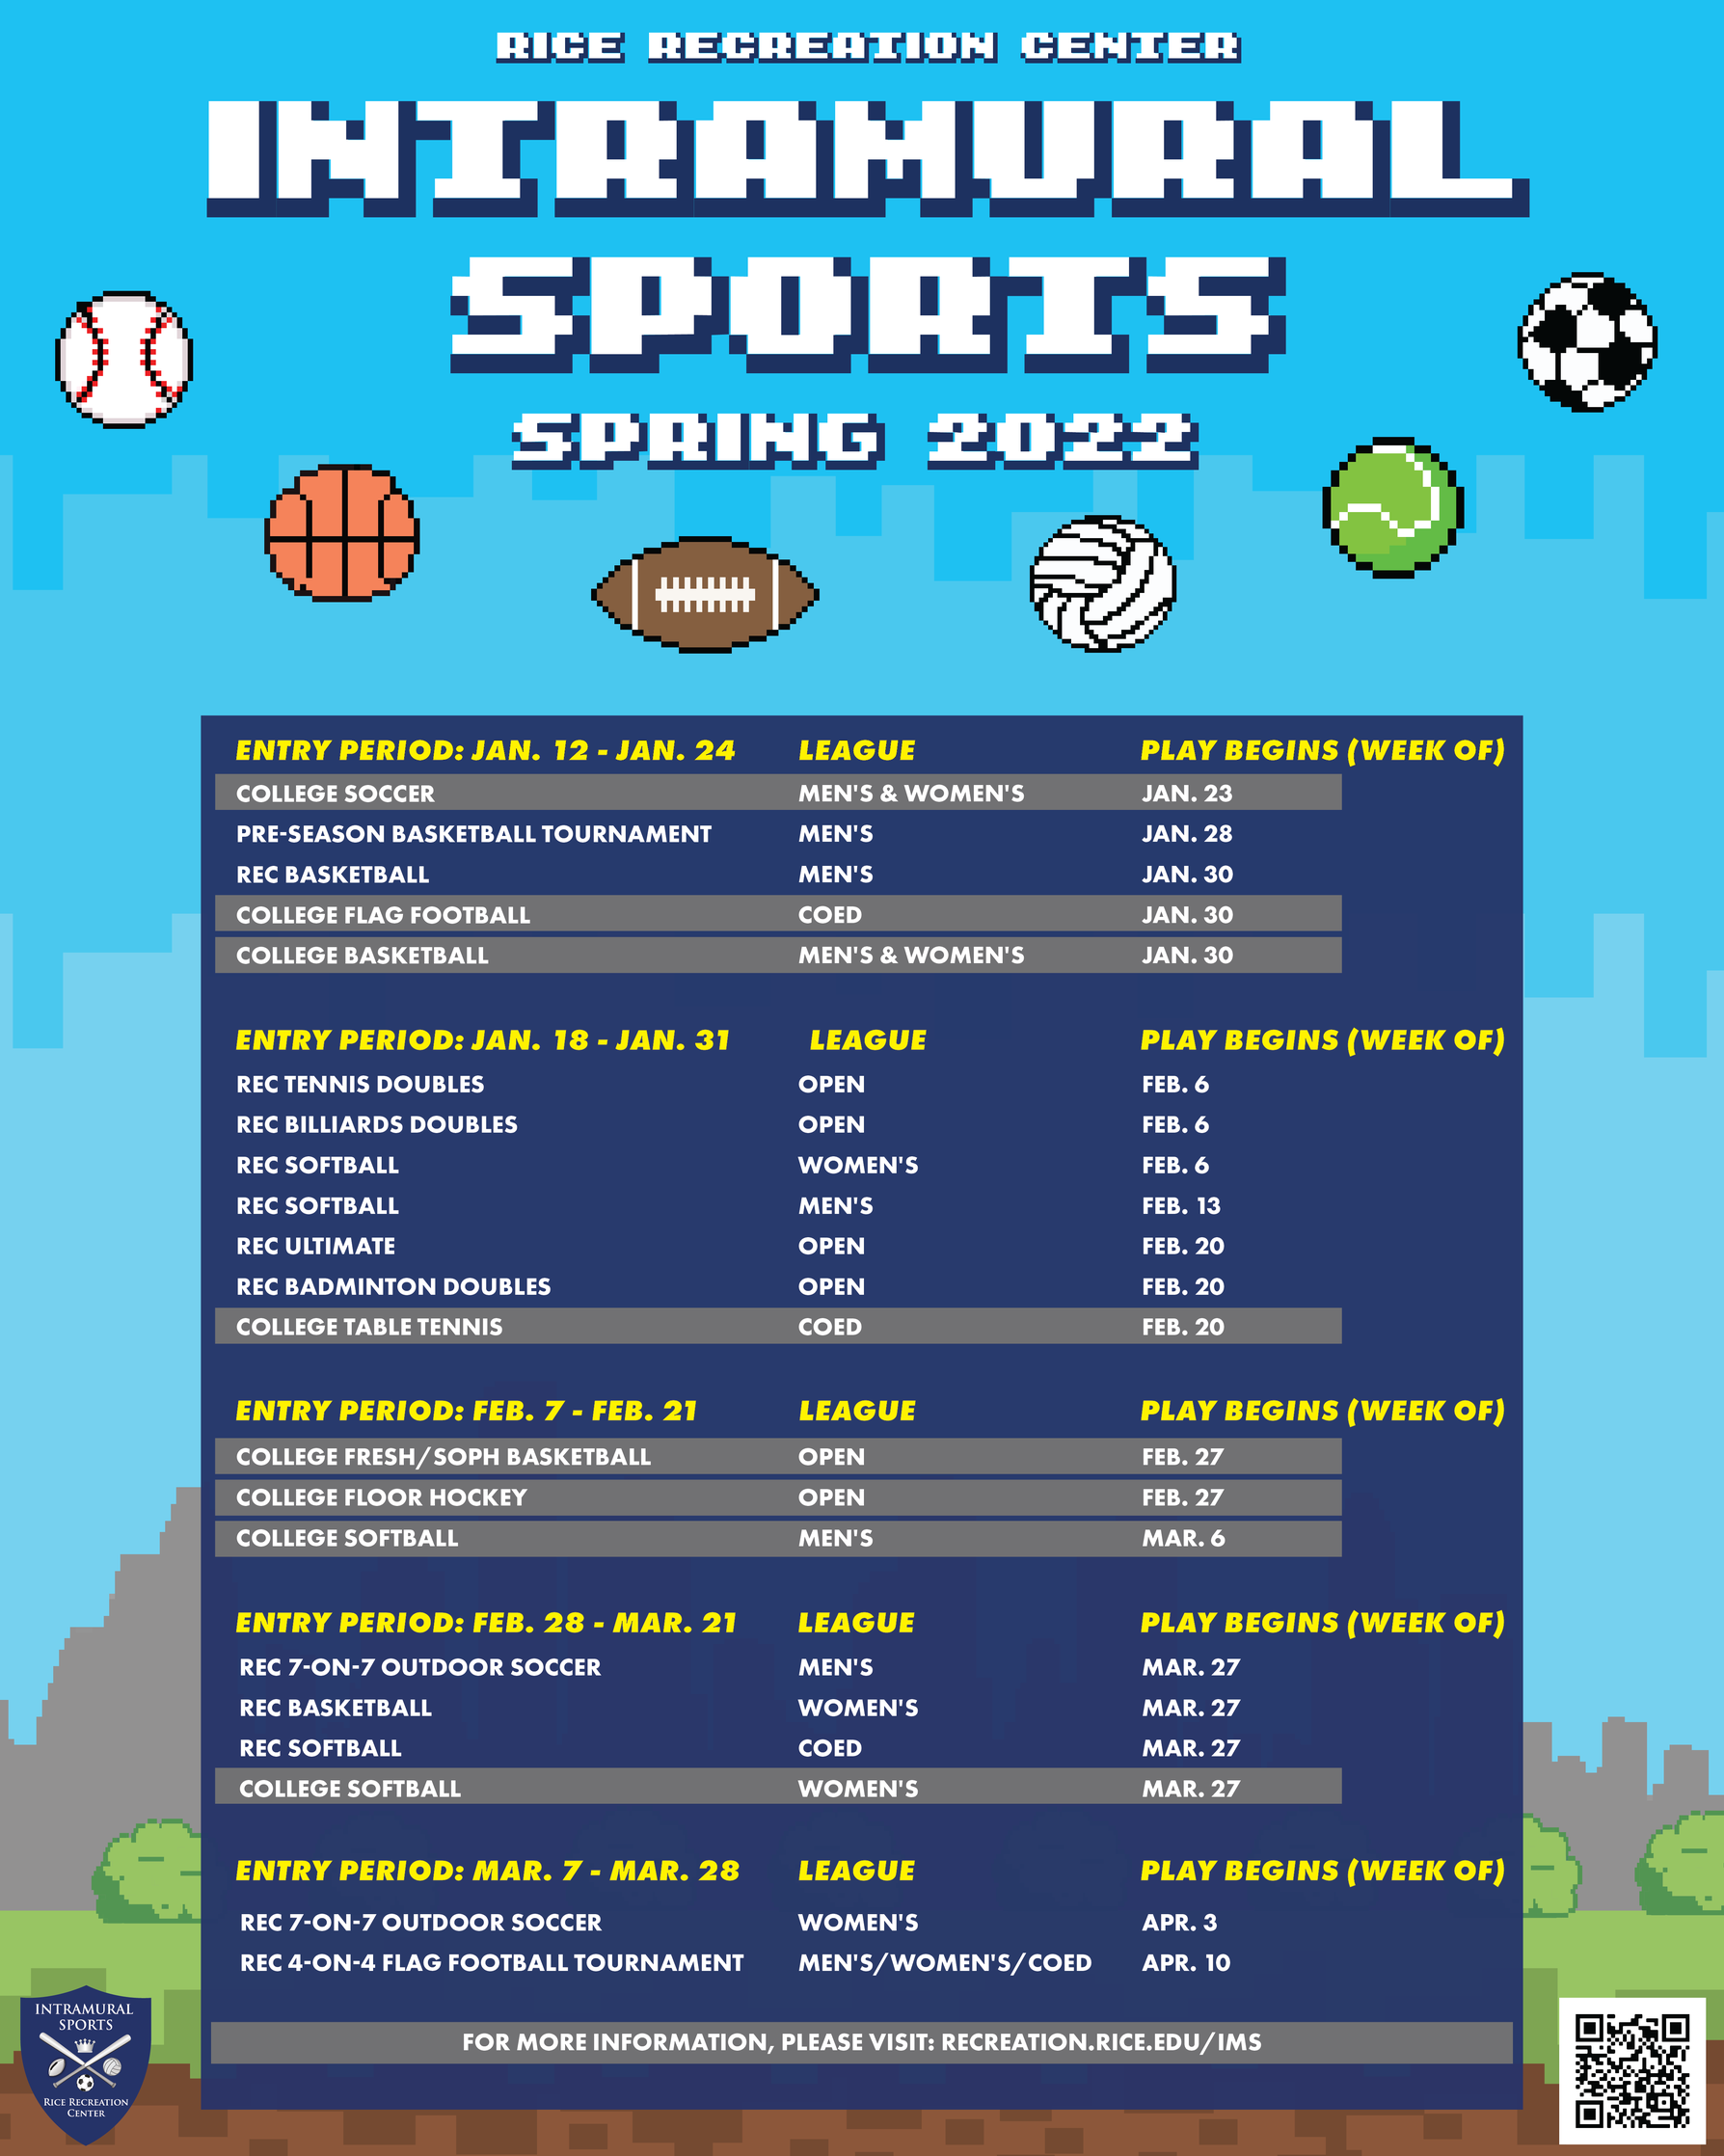 Spring 2022 Rice Calendar Intramural Sports Schedule |Recreation Center | Rice University